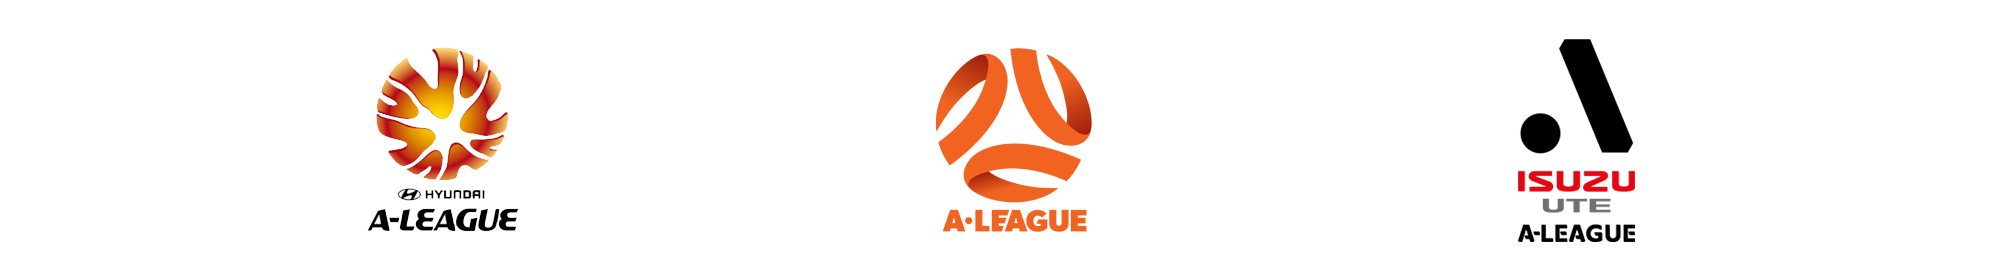 A-League logo evolution